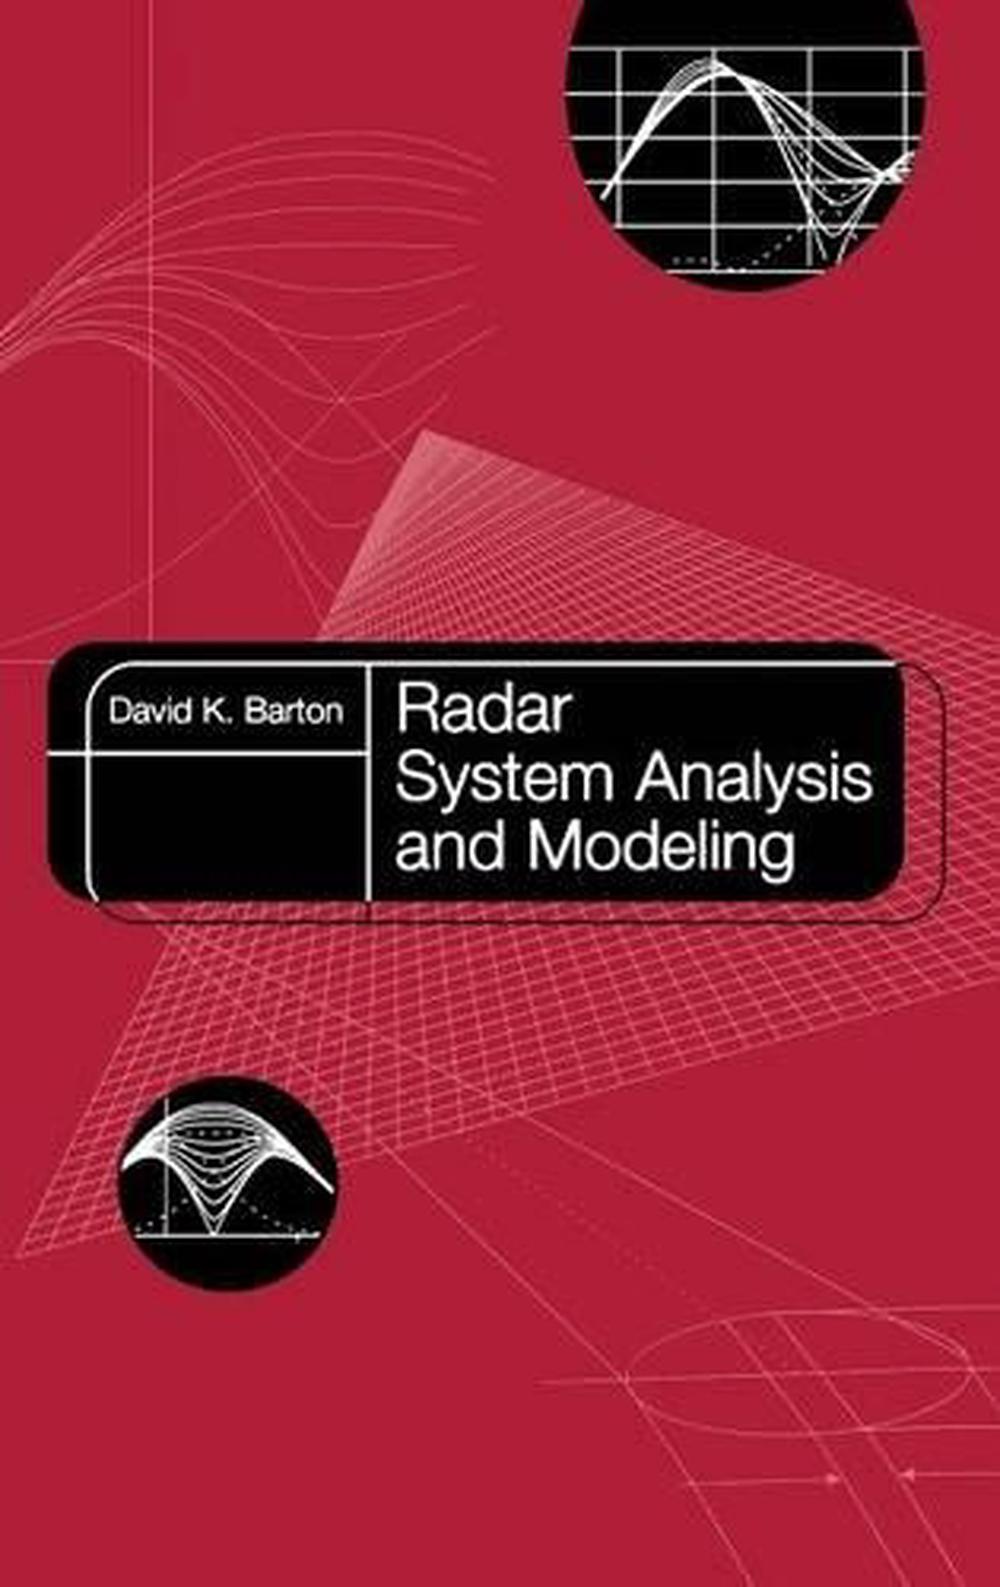 Radar System Analysis and Modeling by David K. Barton (English